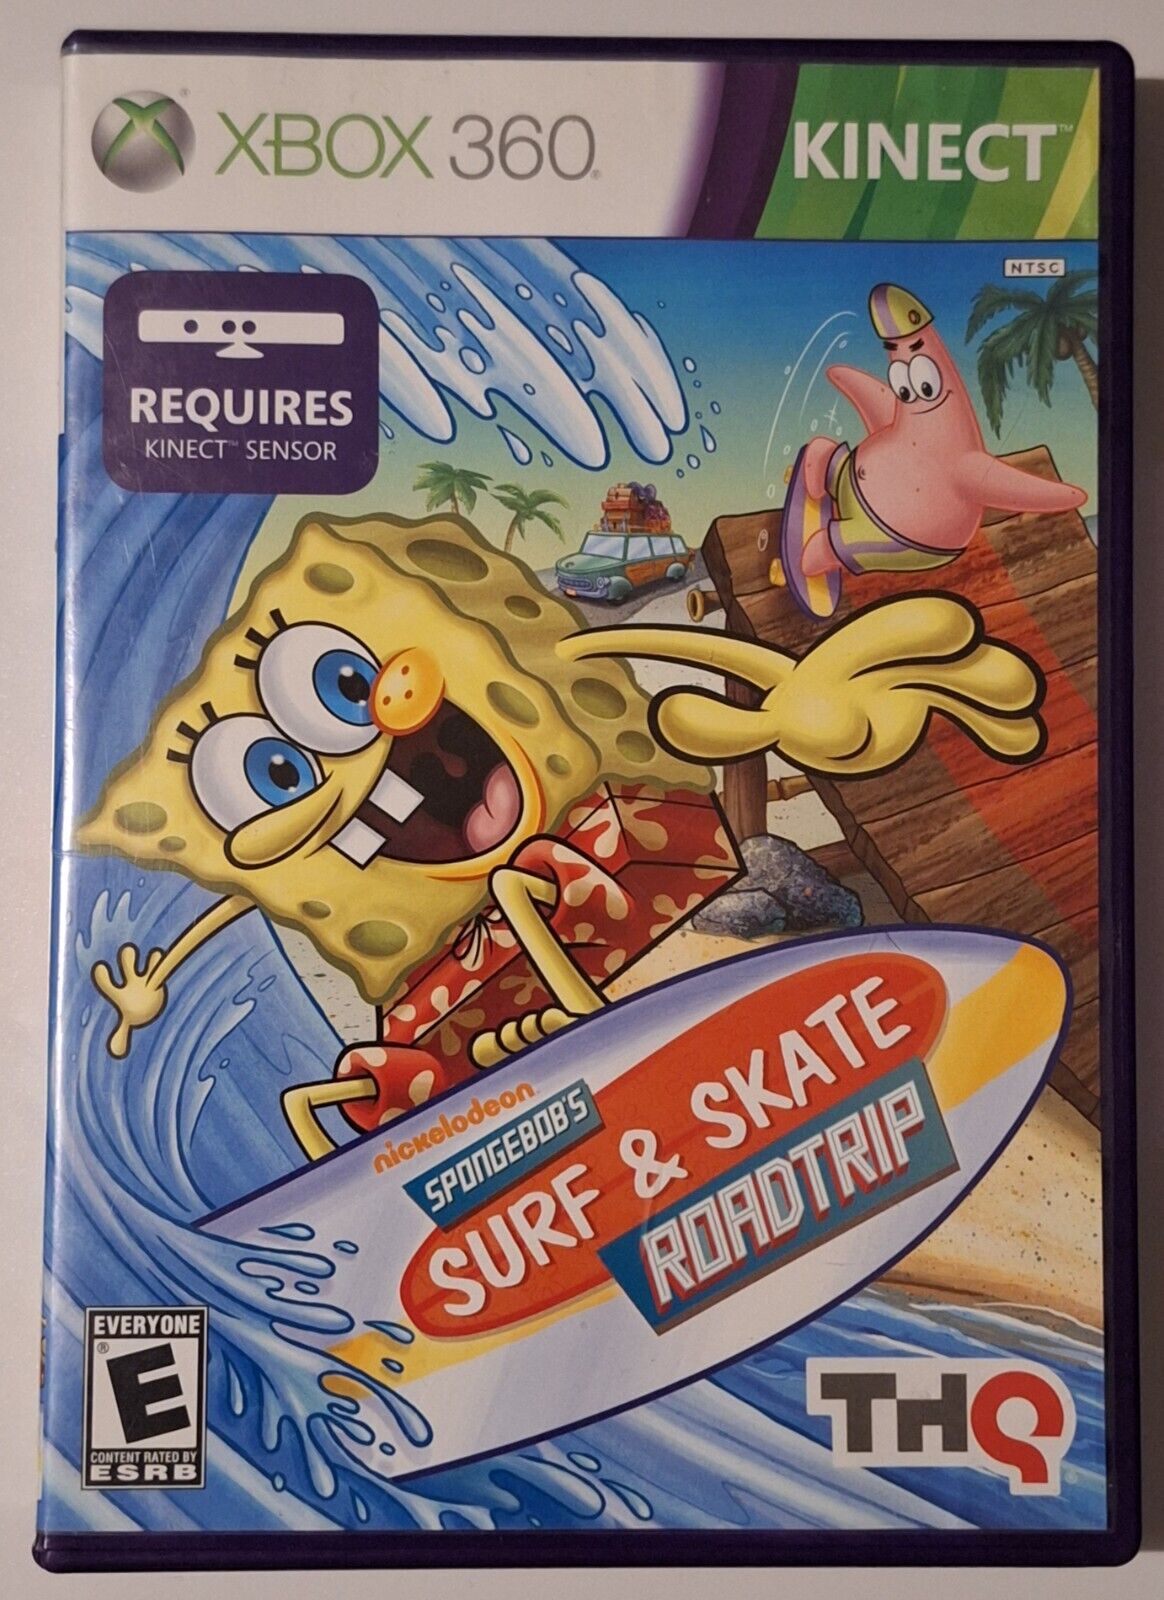 Nickelodeon Spongebob's Surf & Skate Roadtrip - 2011 Xbox 360